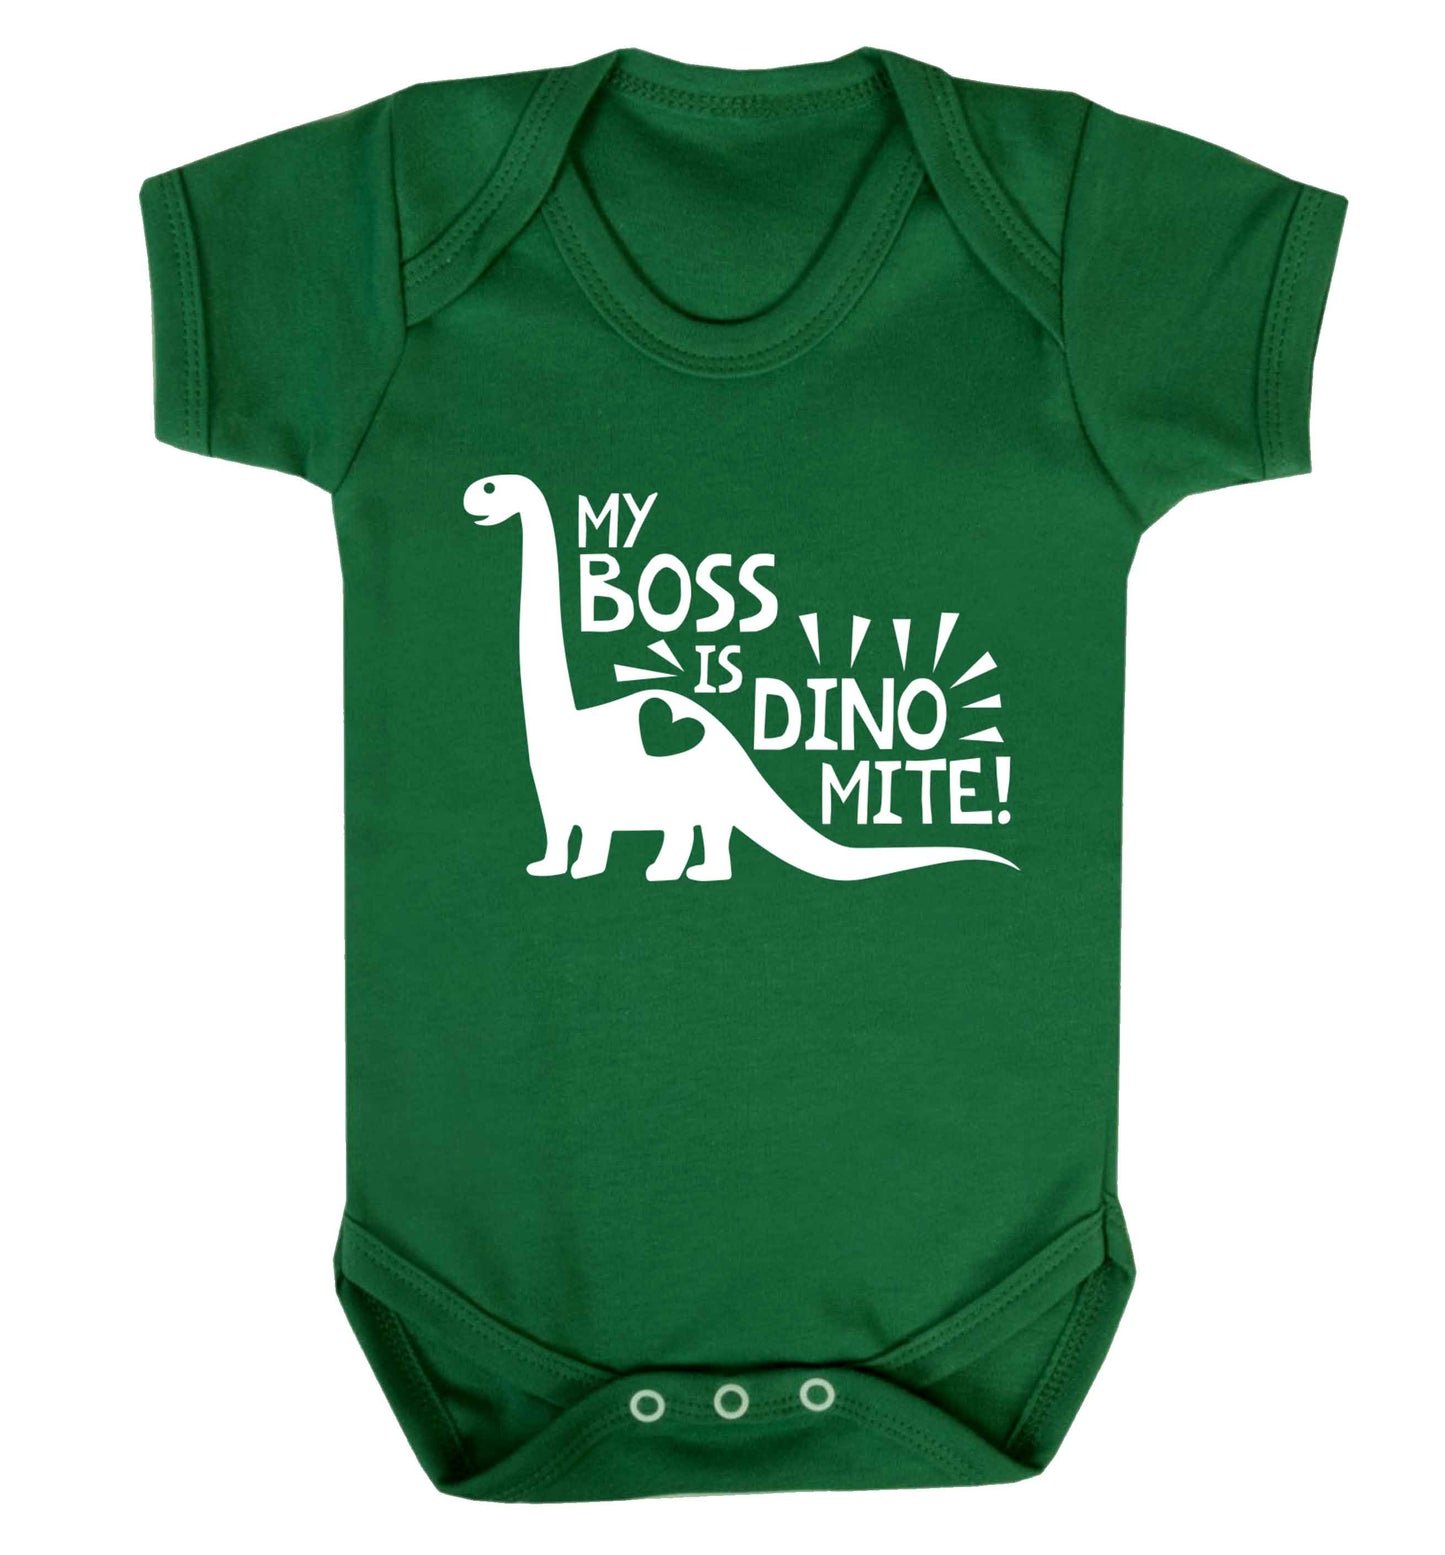 My boss is dinomite! Baby Vest green 18-24 months